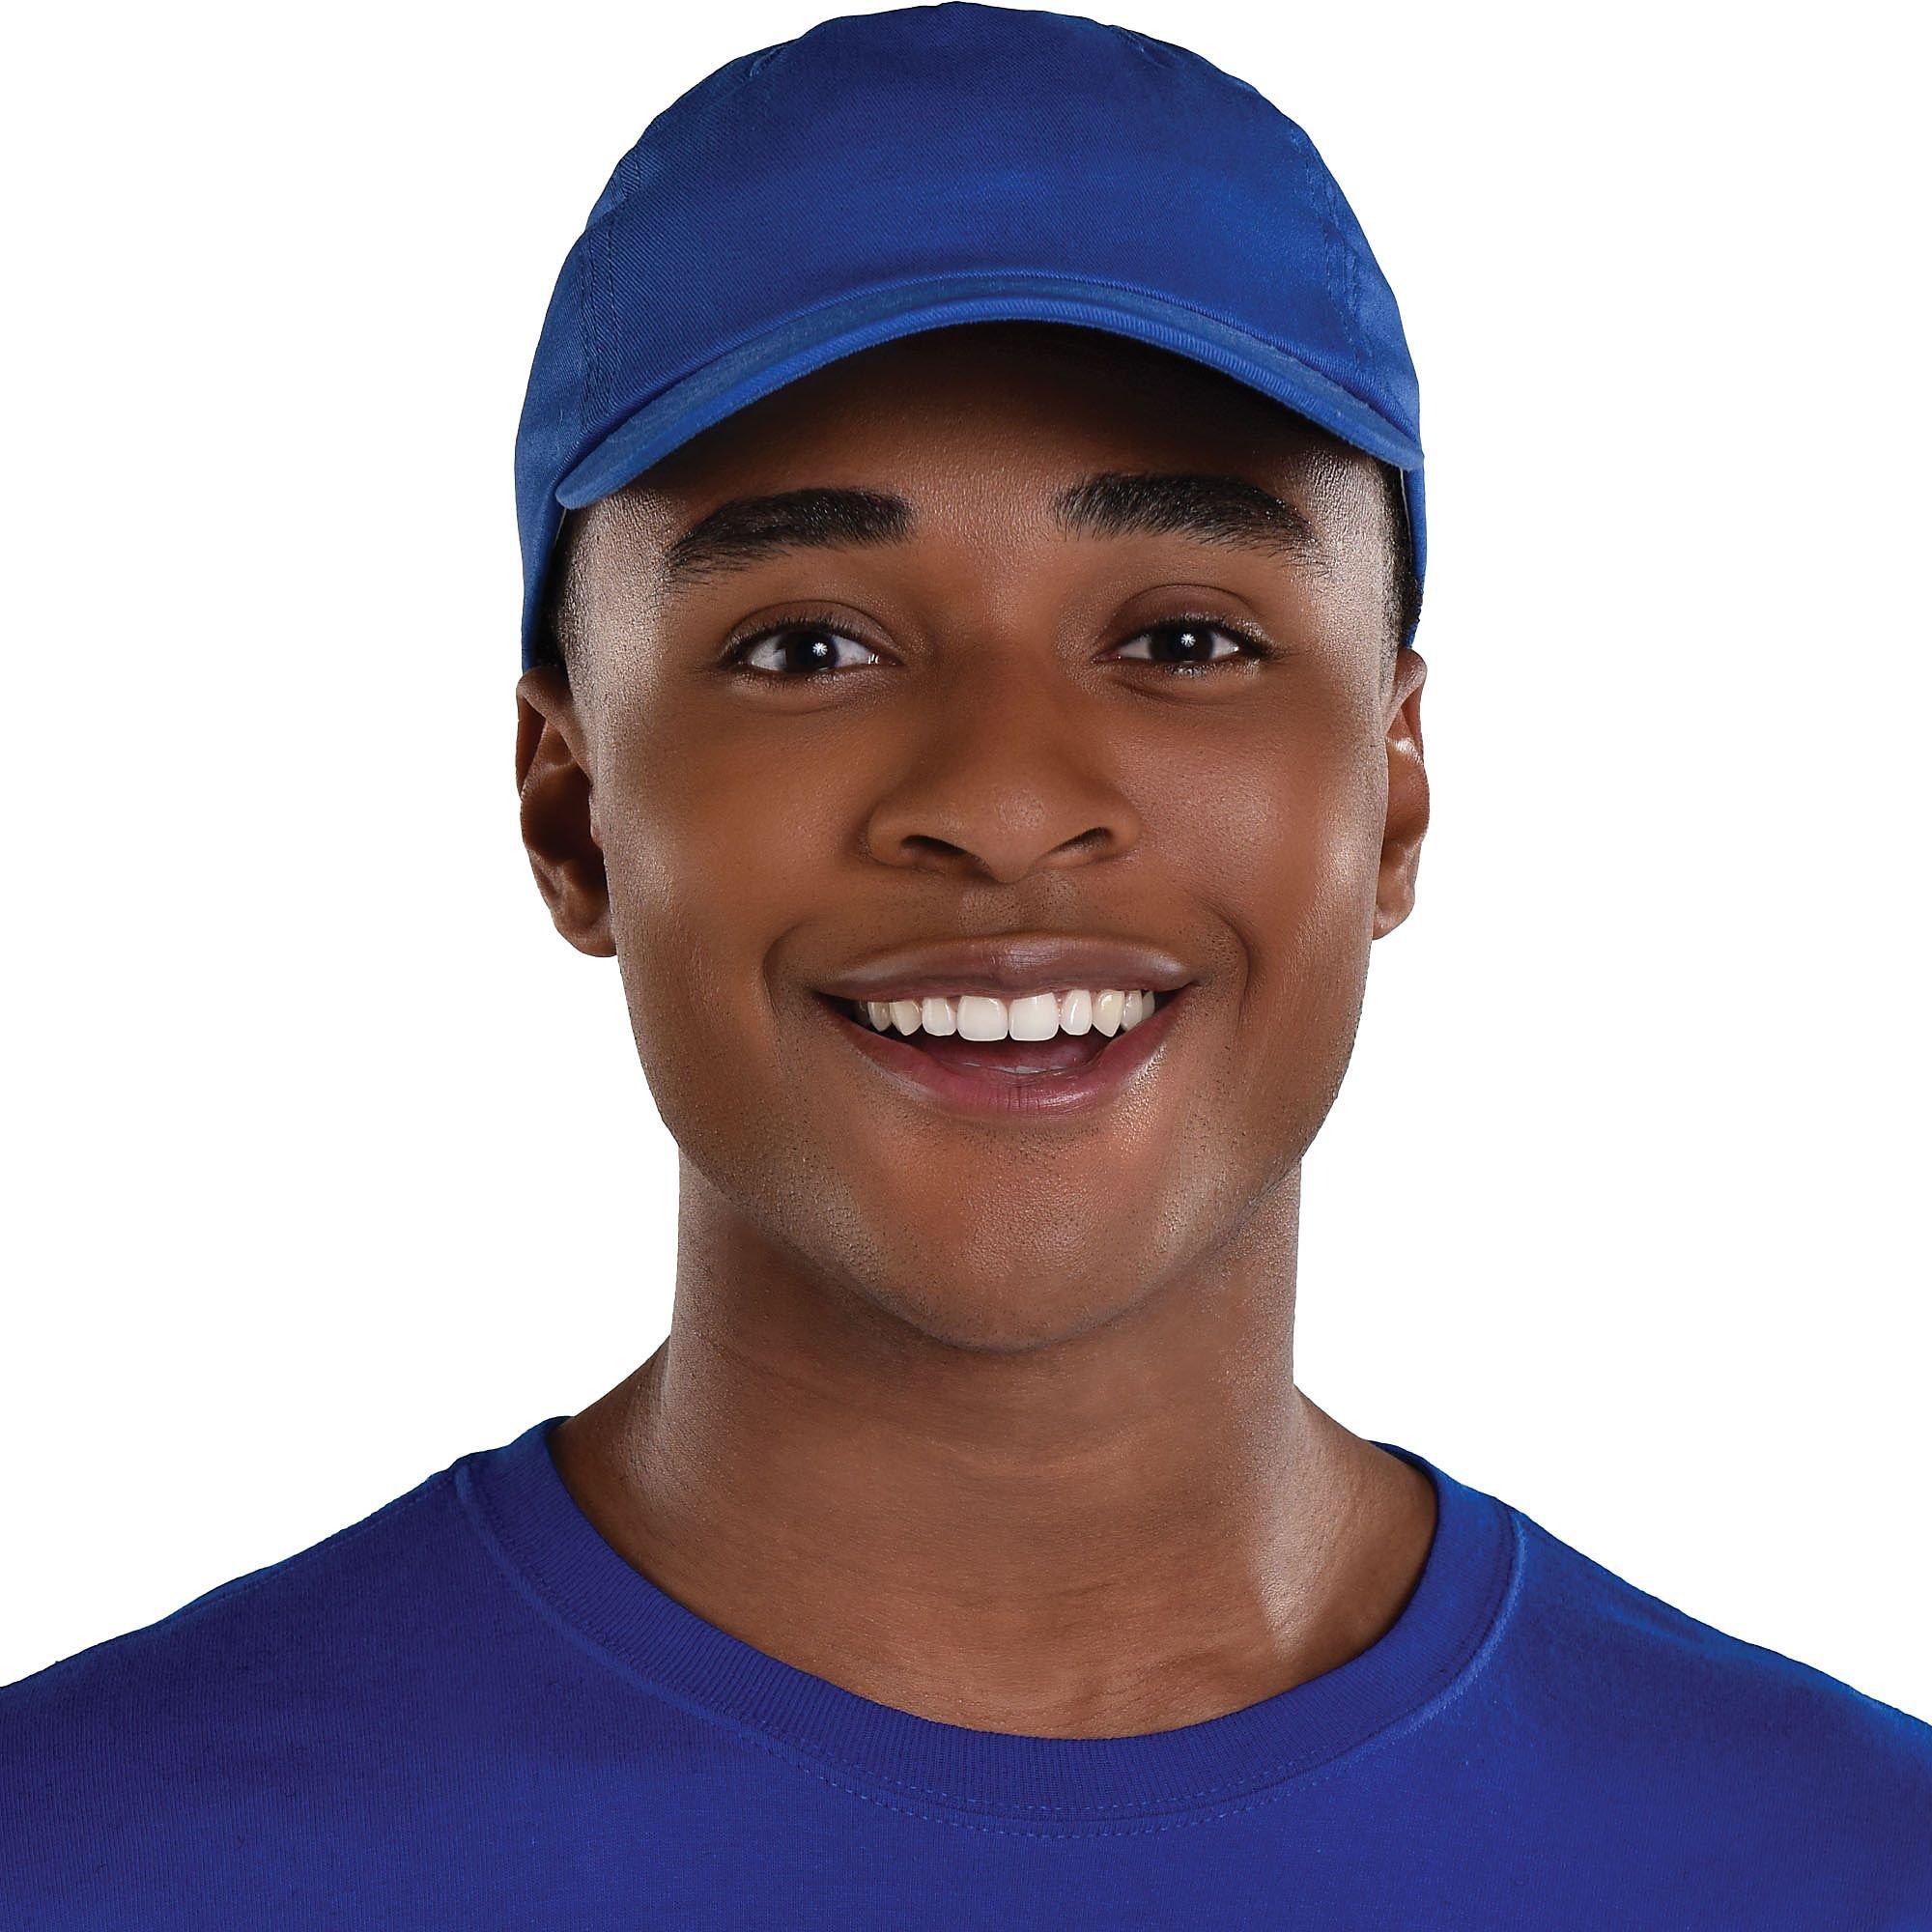 Blue Baseball Hat